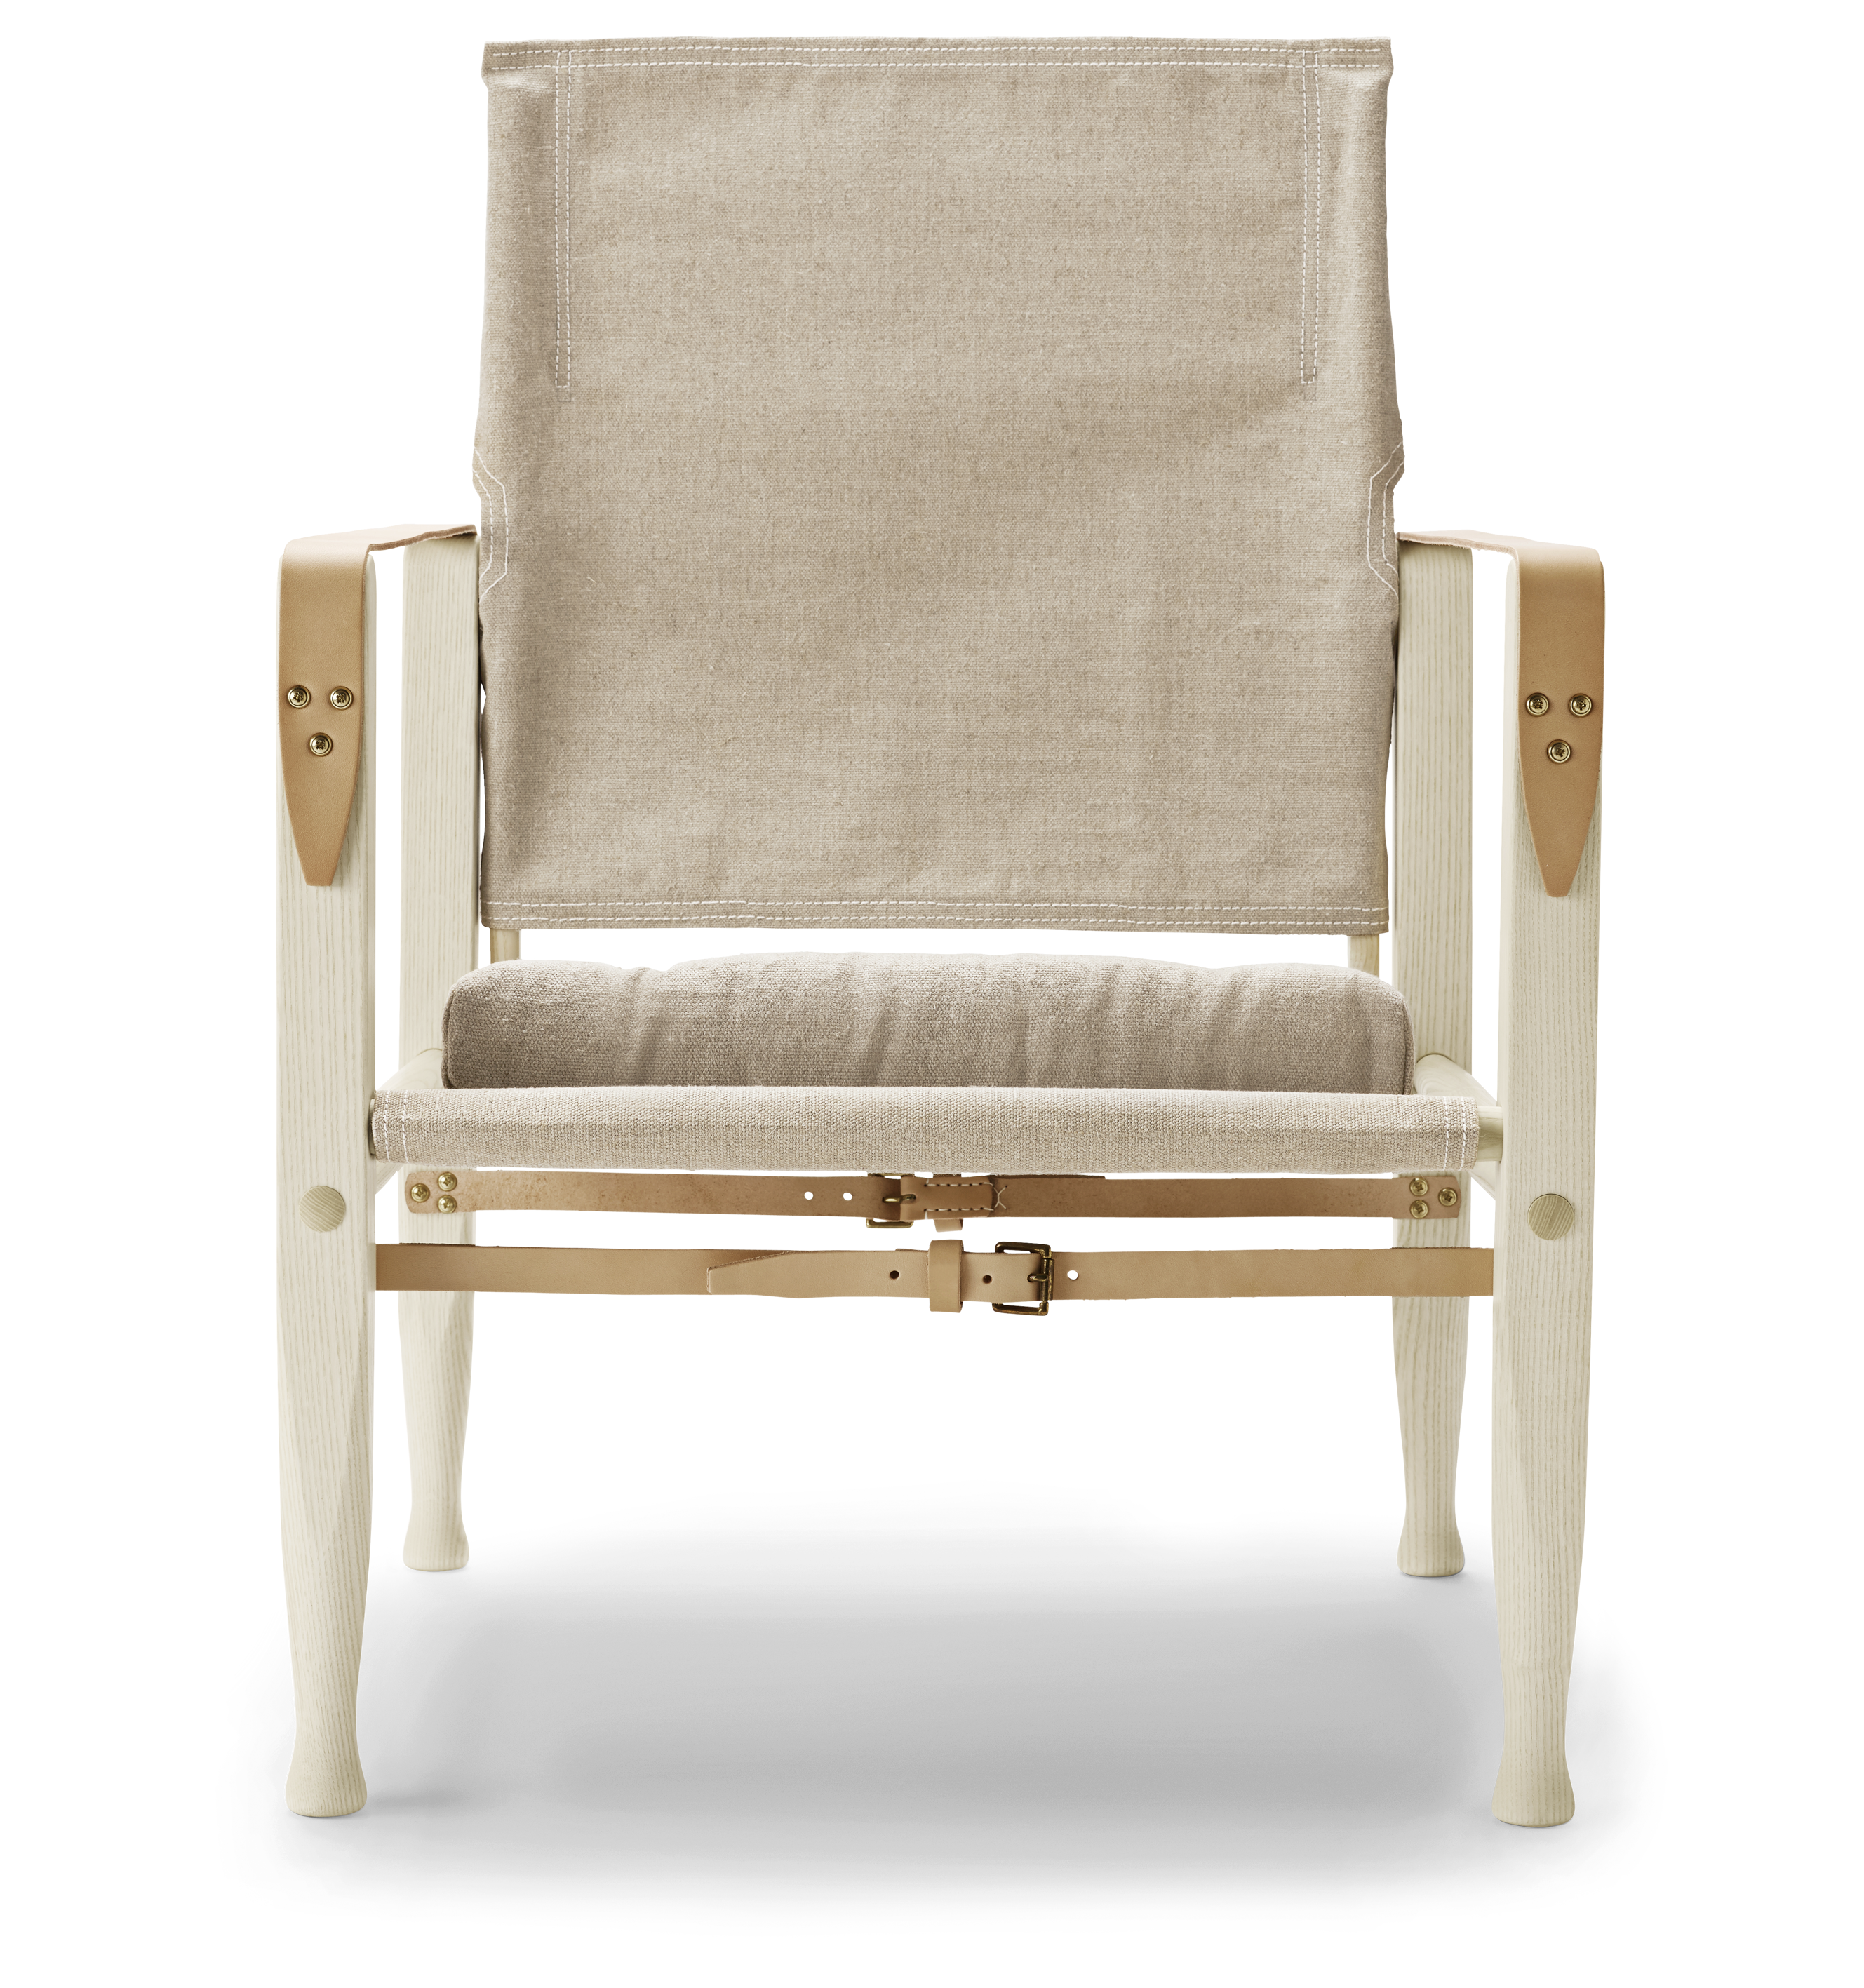 Kk47000 Safari Chair By Kaare Klint, Leather Safari Chairs